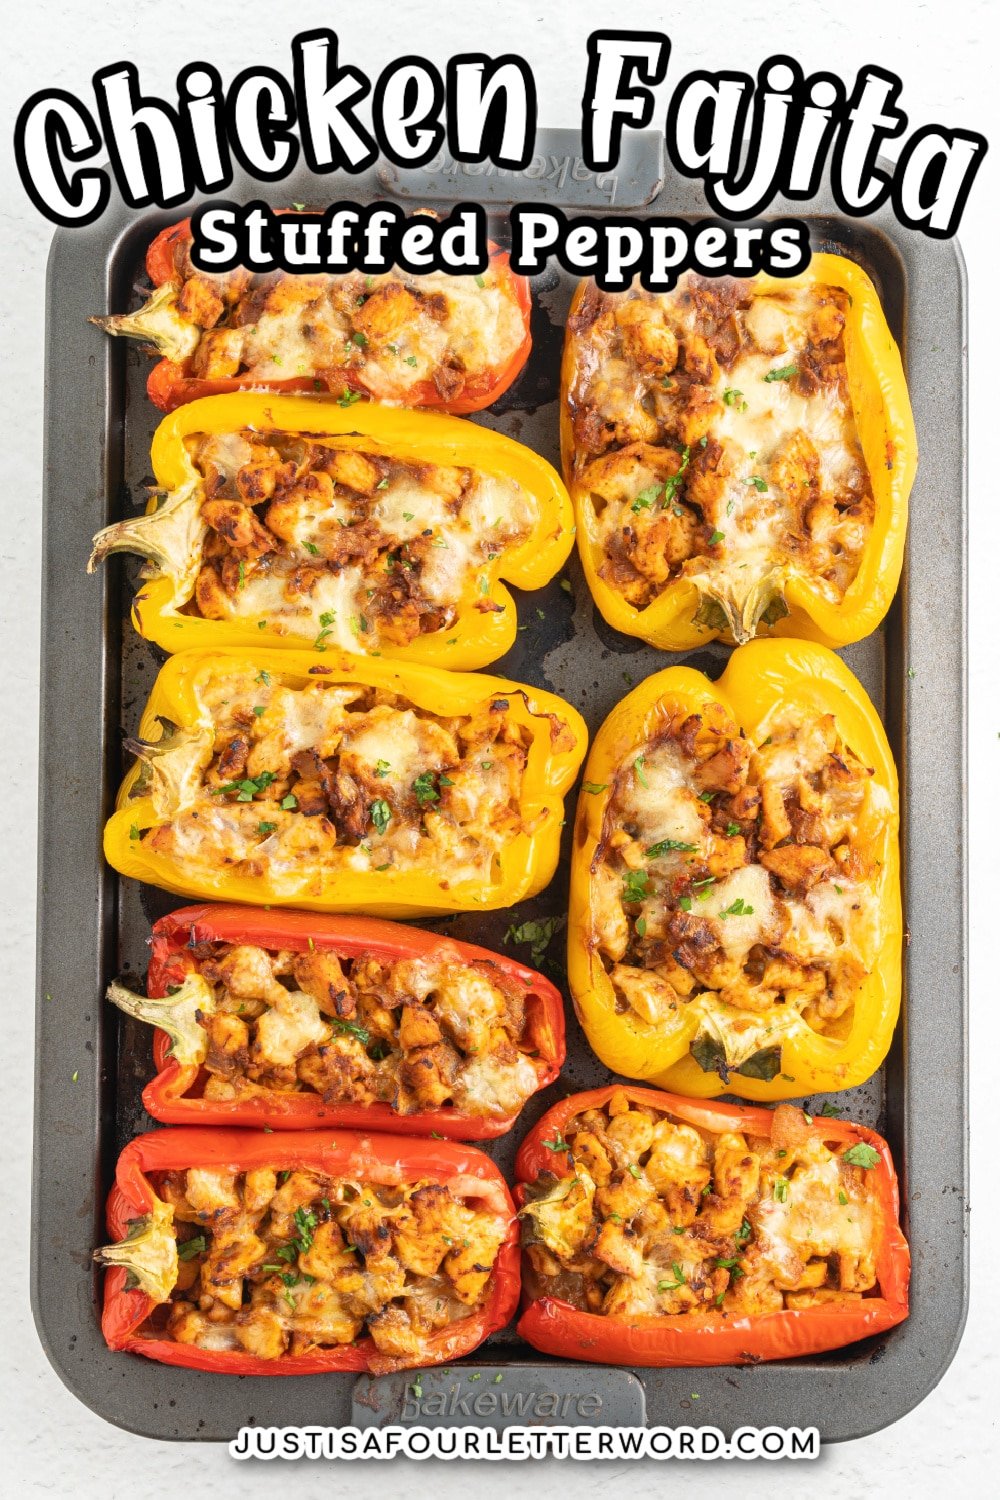 stuffed fajita chicken peppers with text